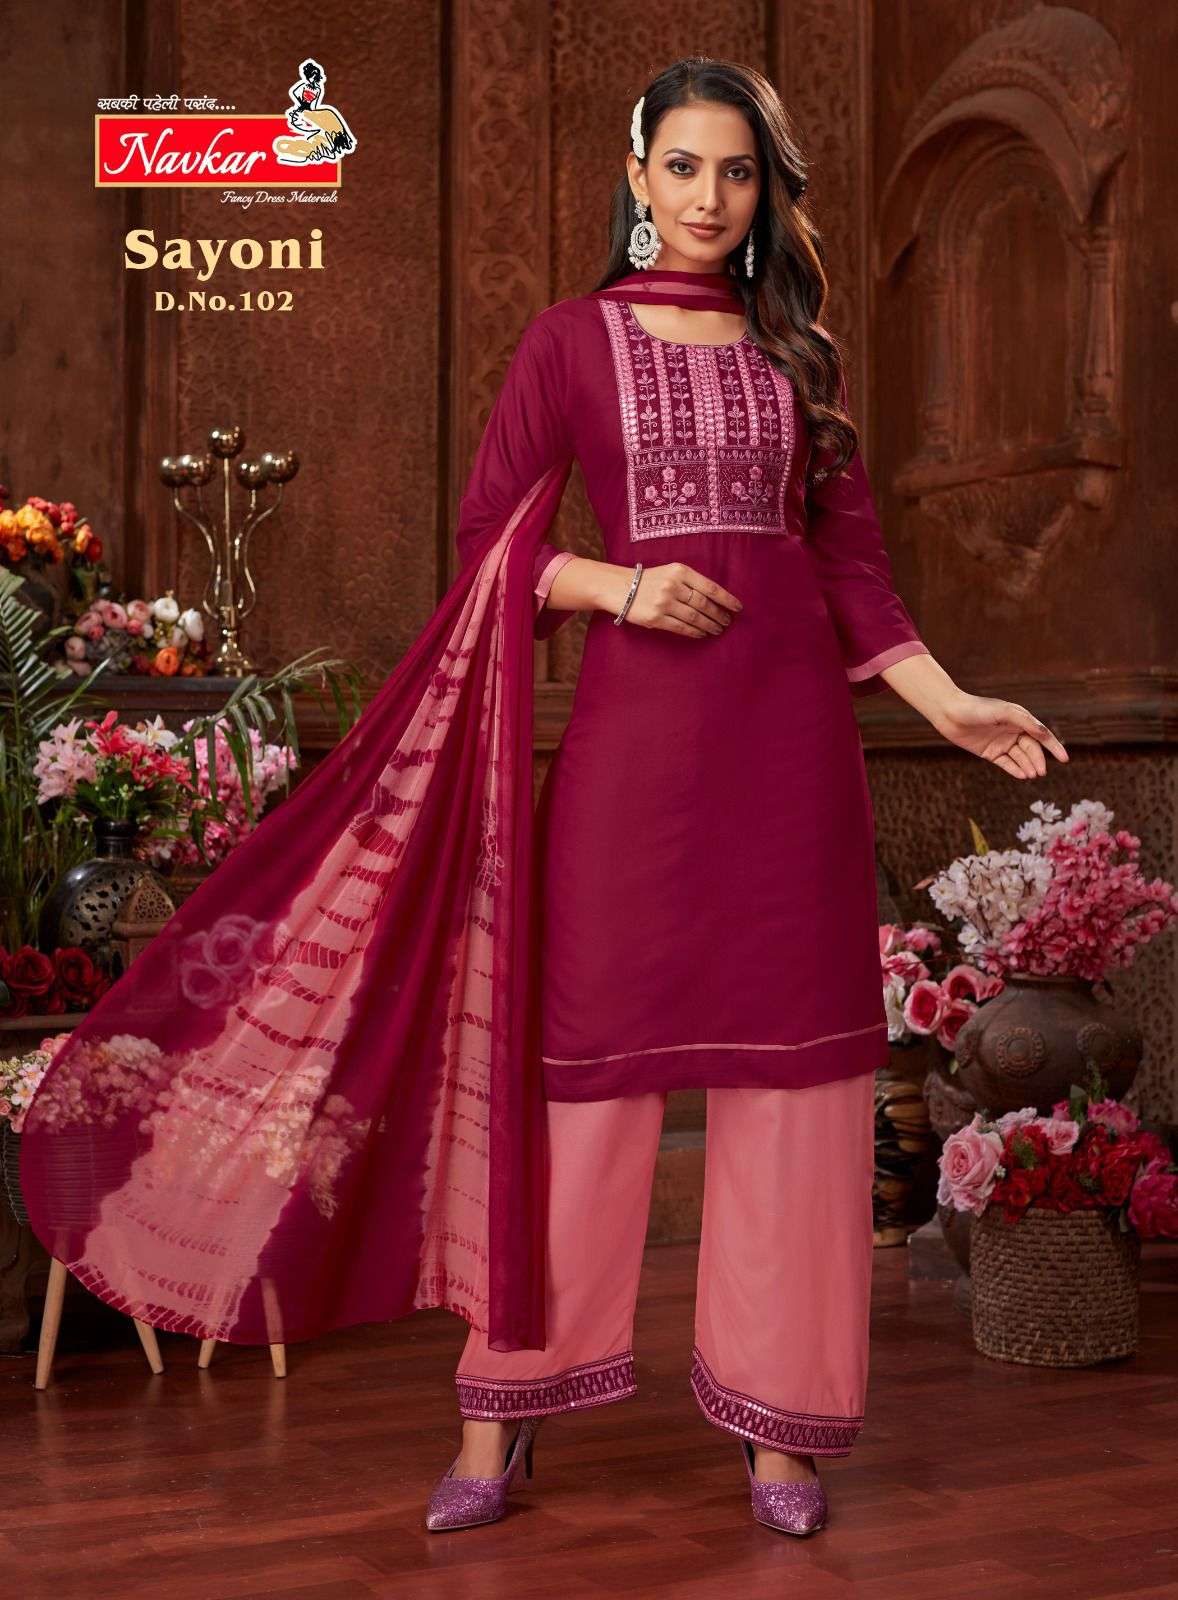 navkar sayoni 101-108 series latest designer top bottom with dupatta catalogue manufacturer surat 